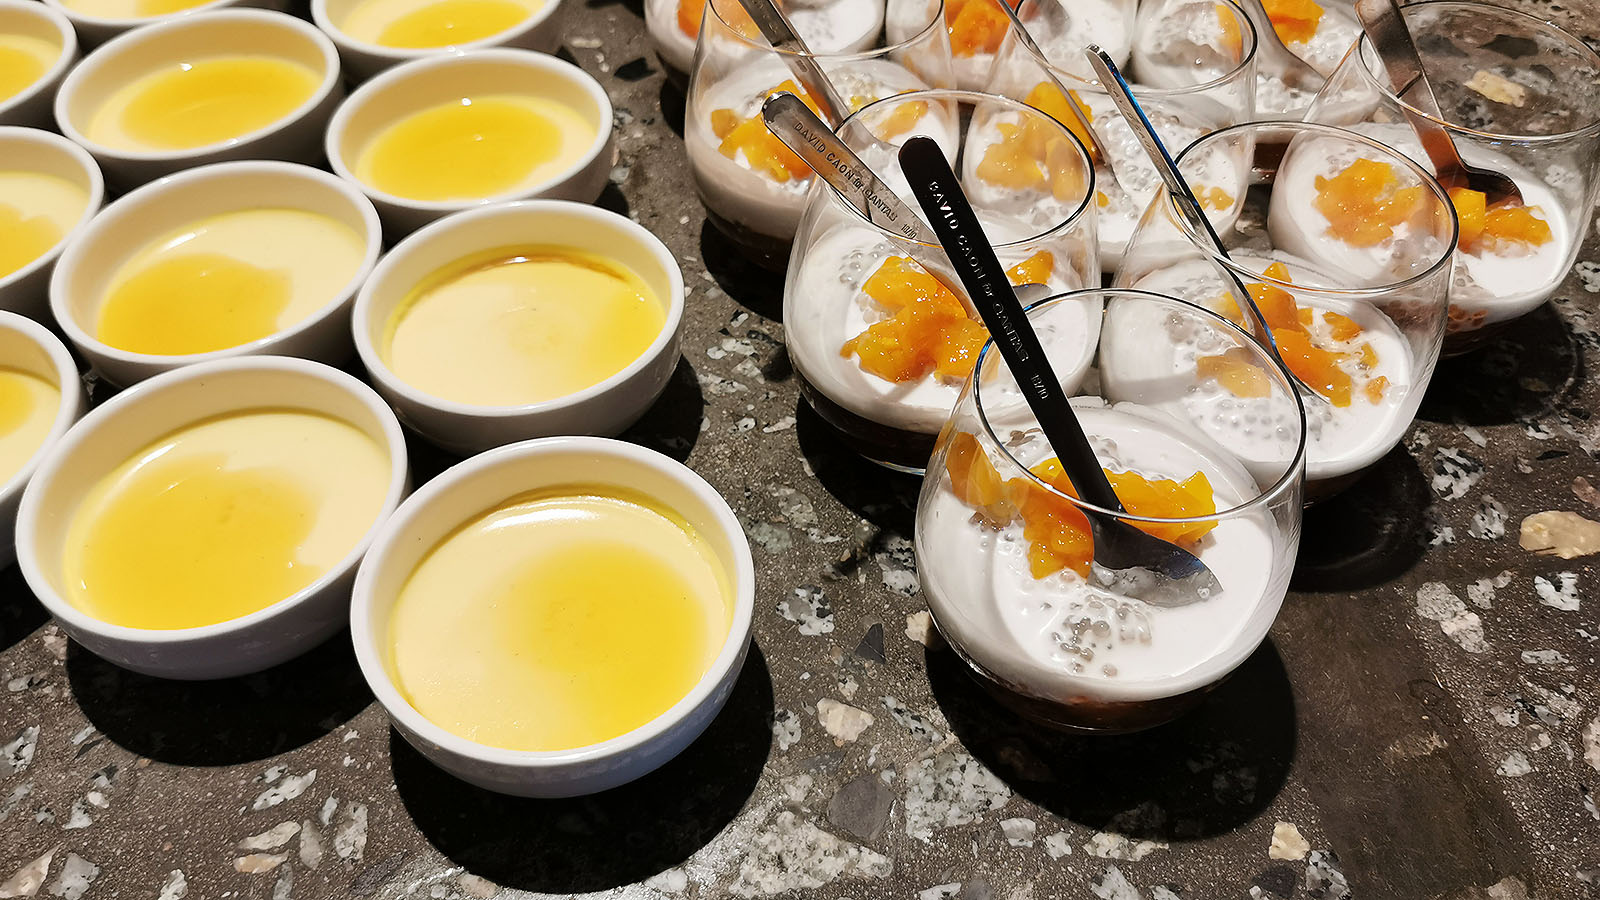 Dessert buffet items at the Qantas International Business Lounge in Singapore